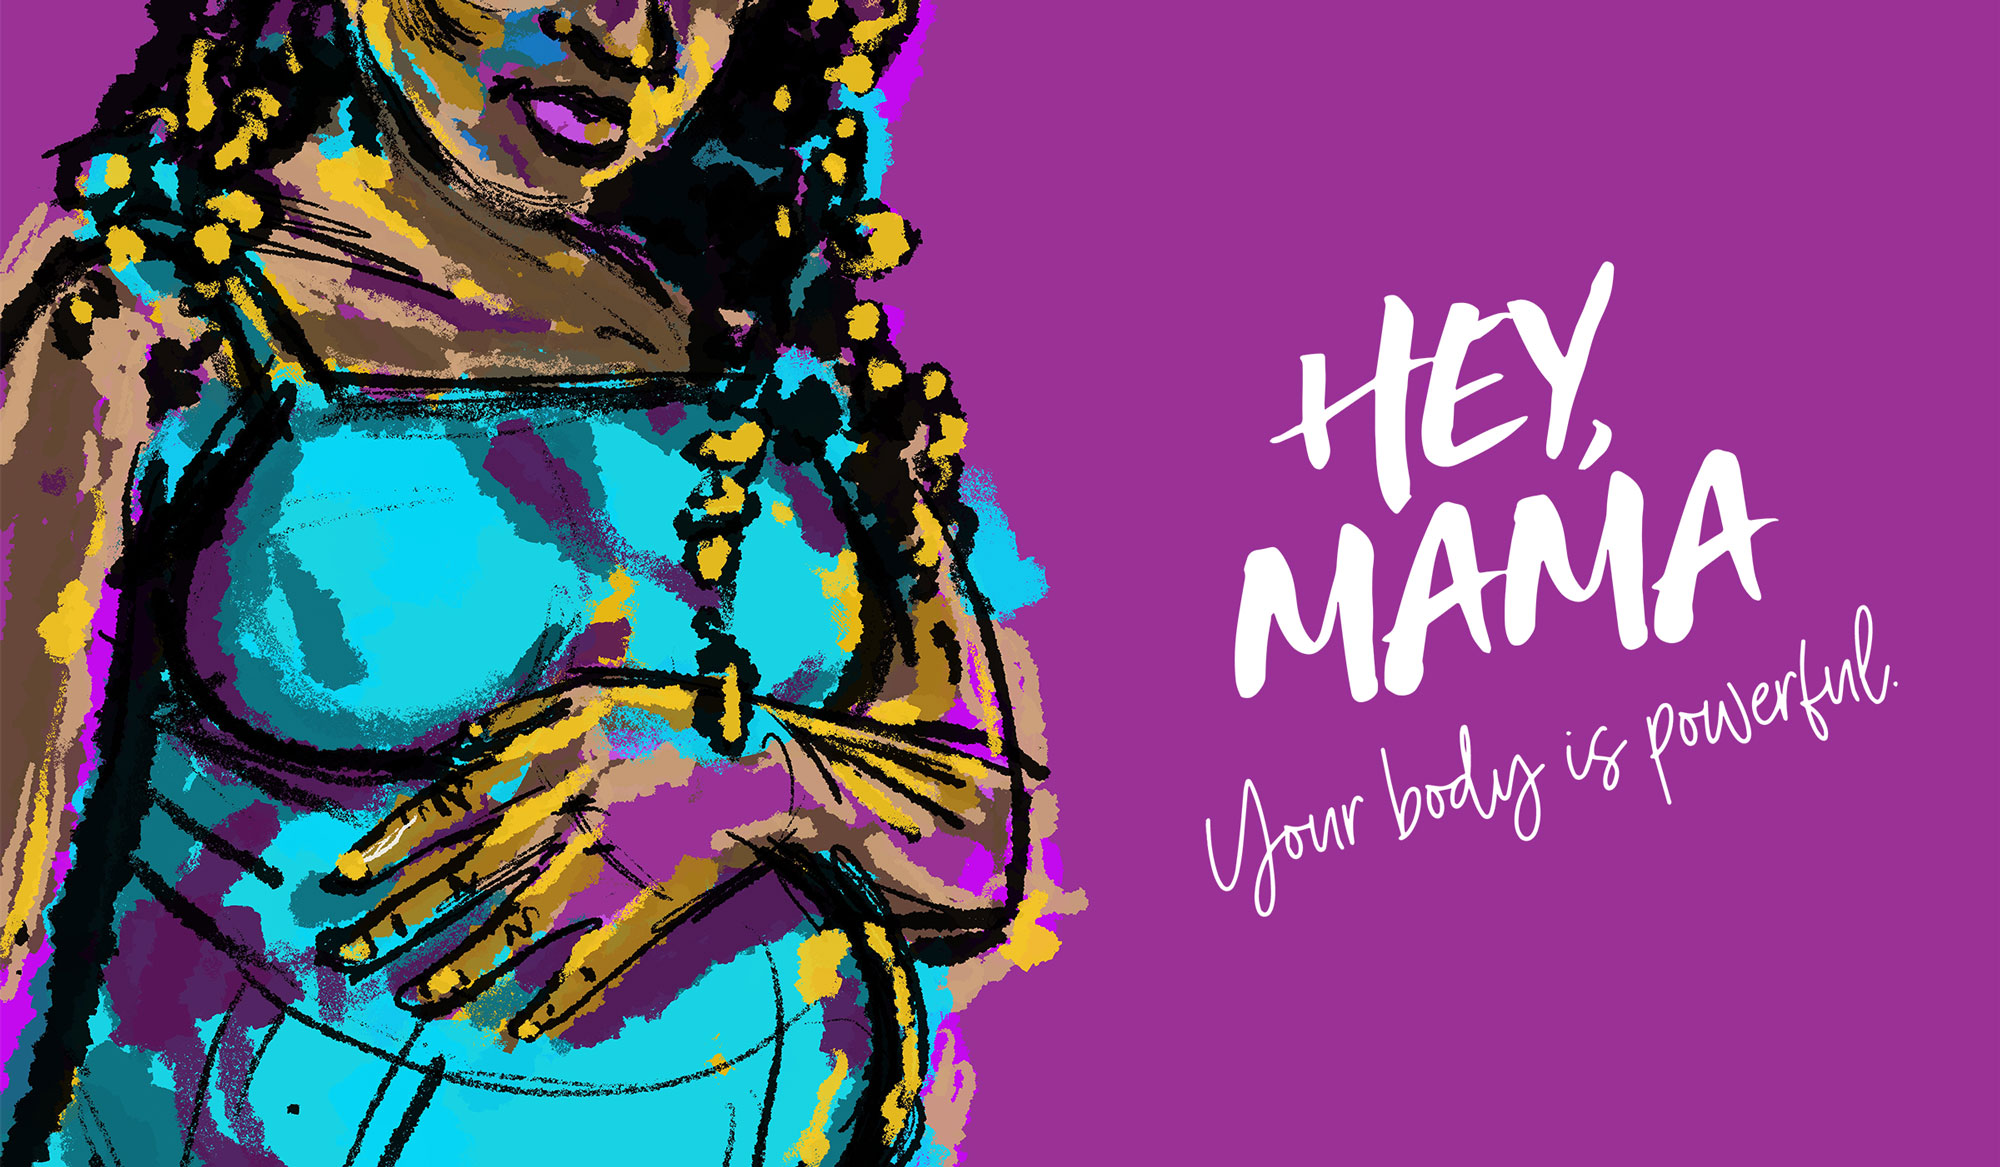 Hey, Mama – Your body is powerful.